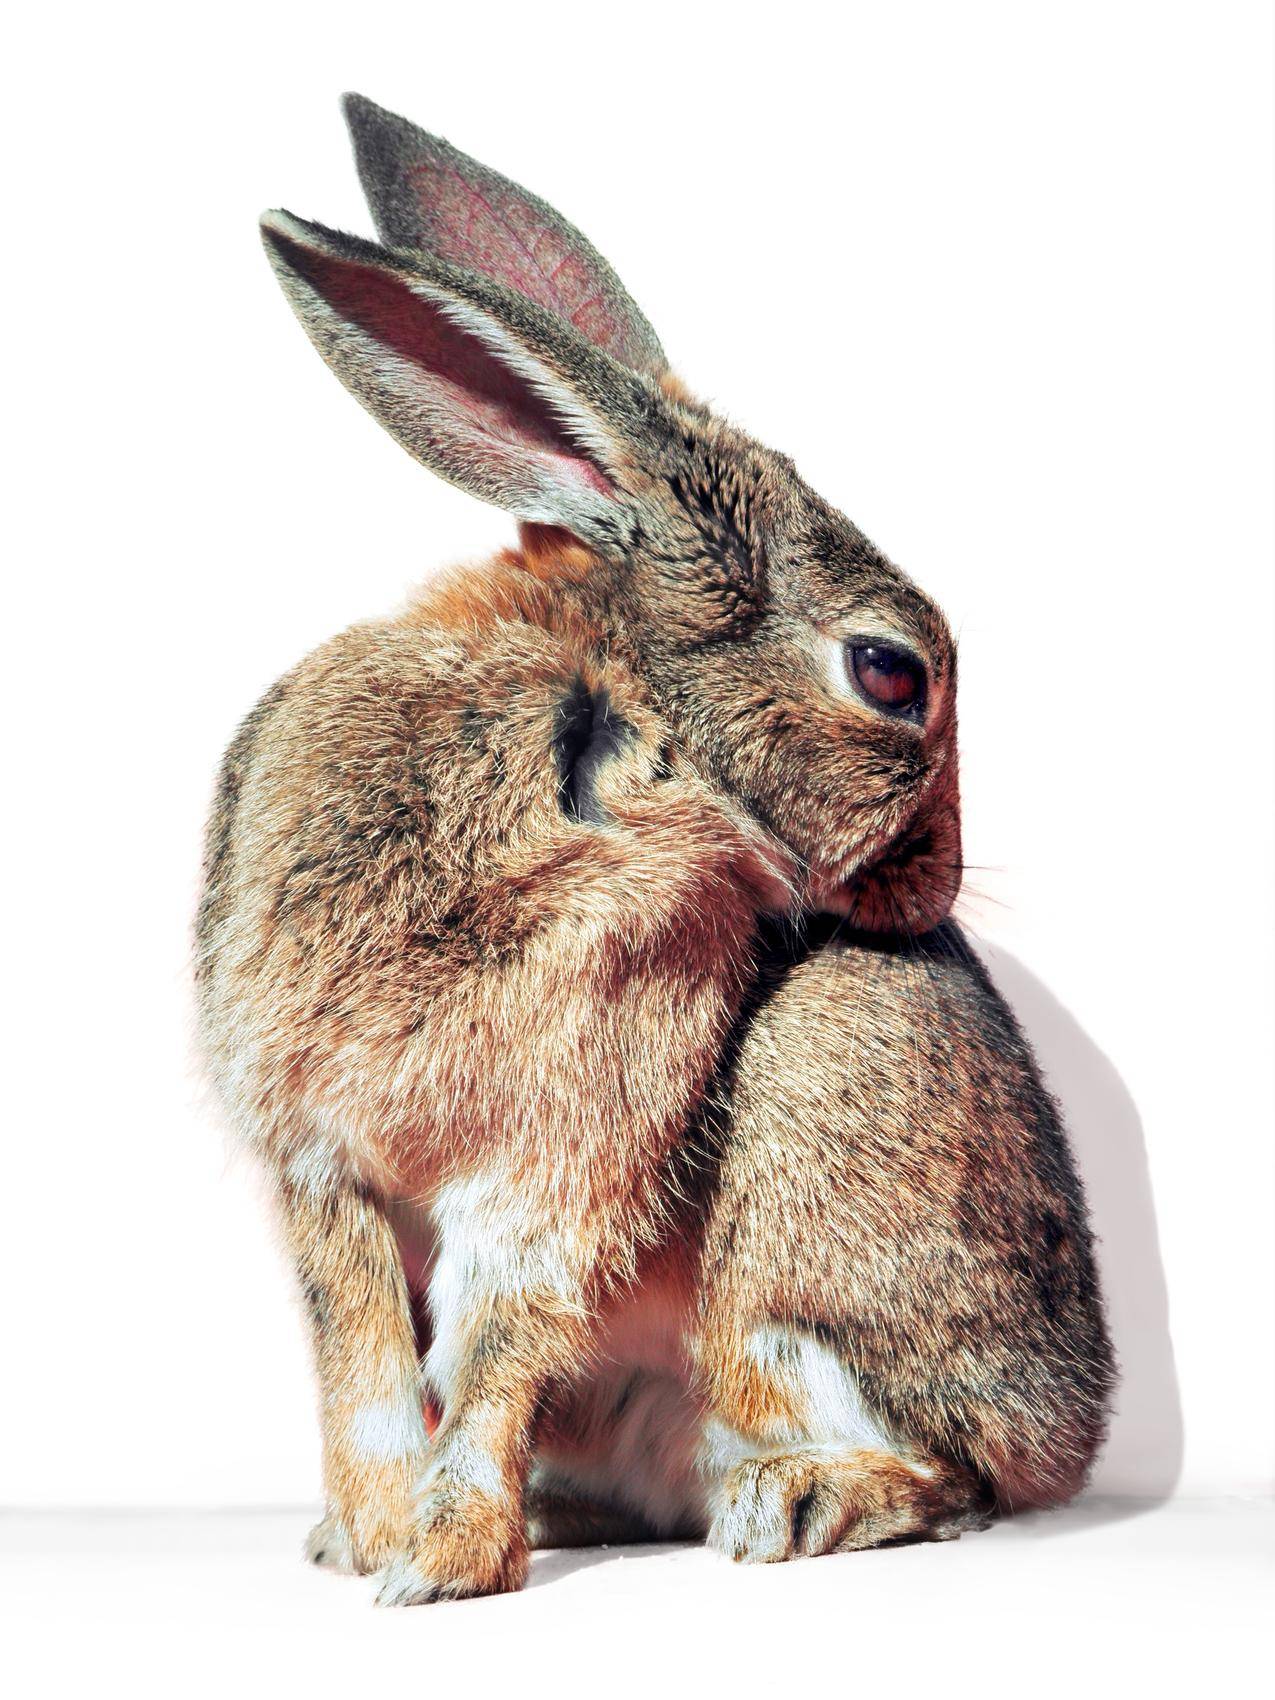 cc0免费可商用动物图片,可爱,兔子,毛绒绒